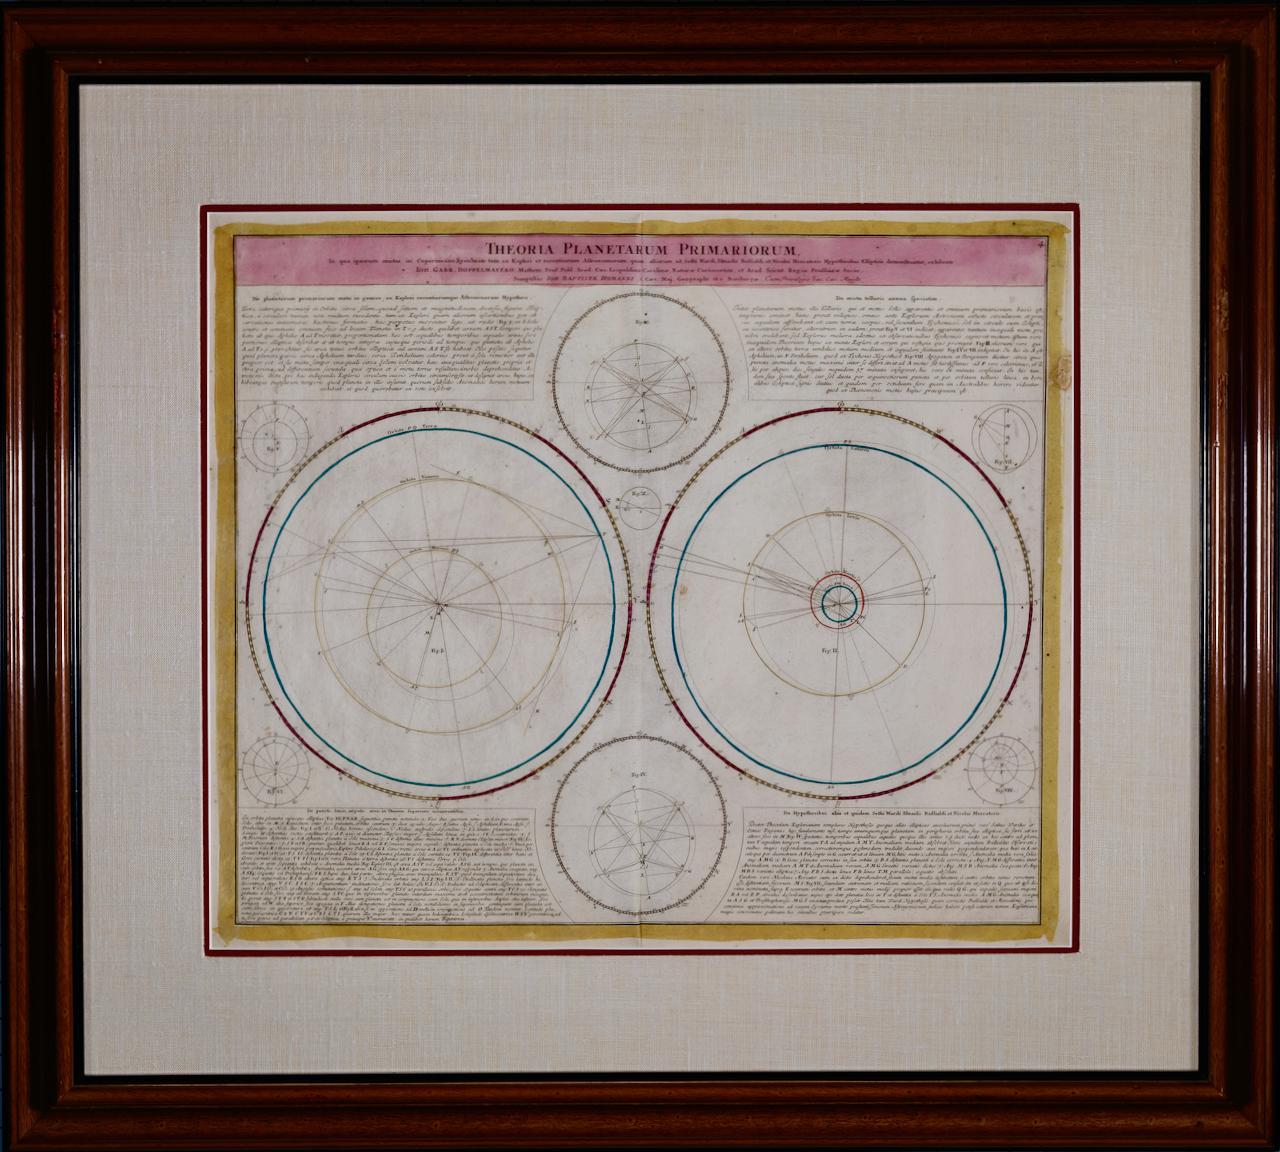 Johann Gabriel Doppelmayr Landscape Print - Theories of Planetary Motion: An 18th C. Framed Celestial Map by Doppelmayr